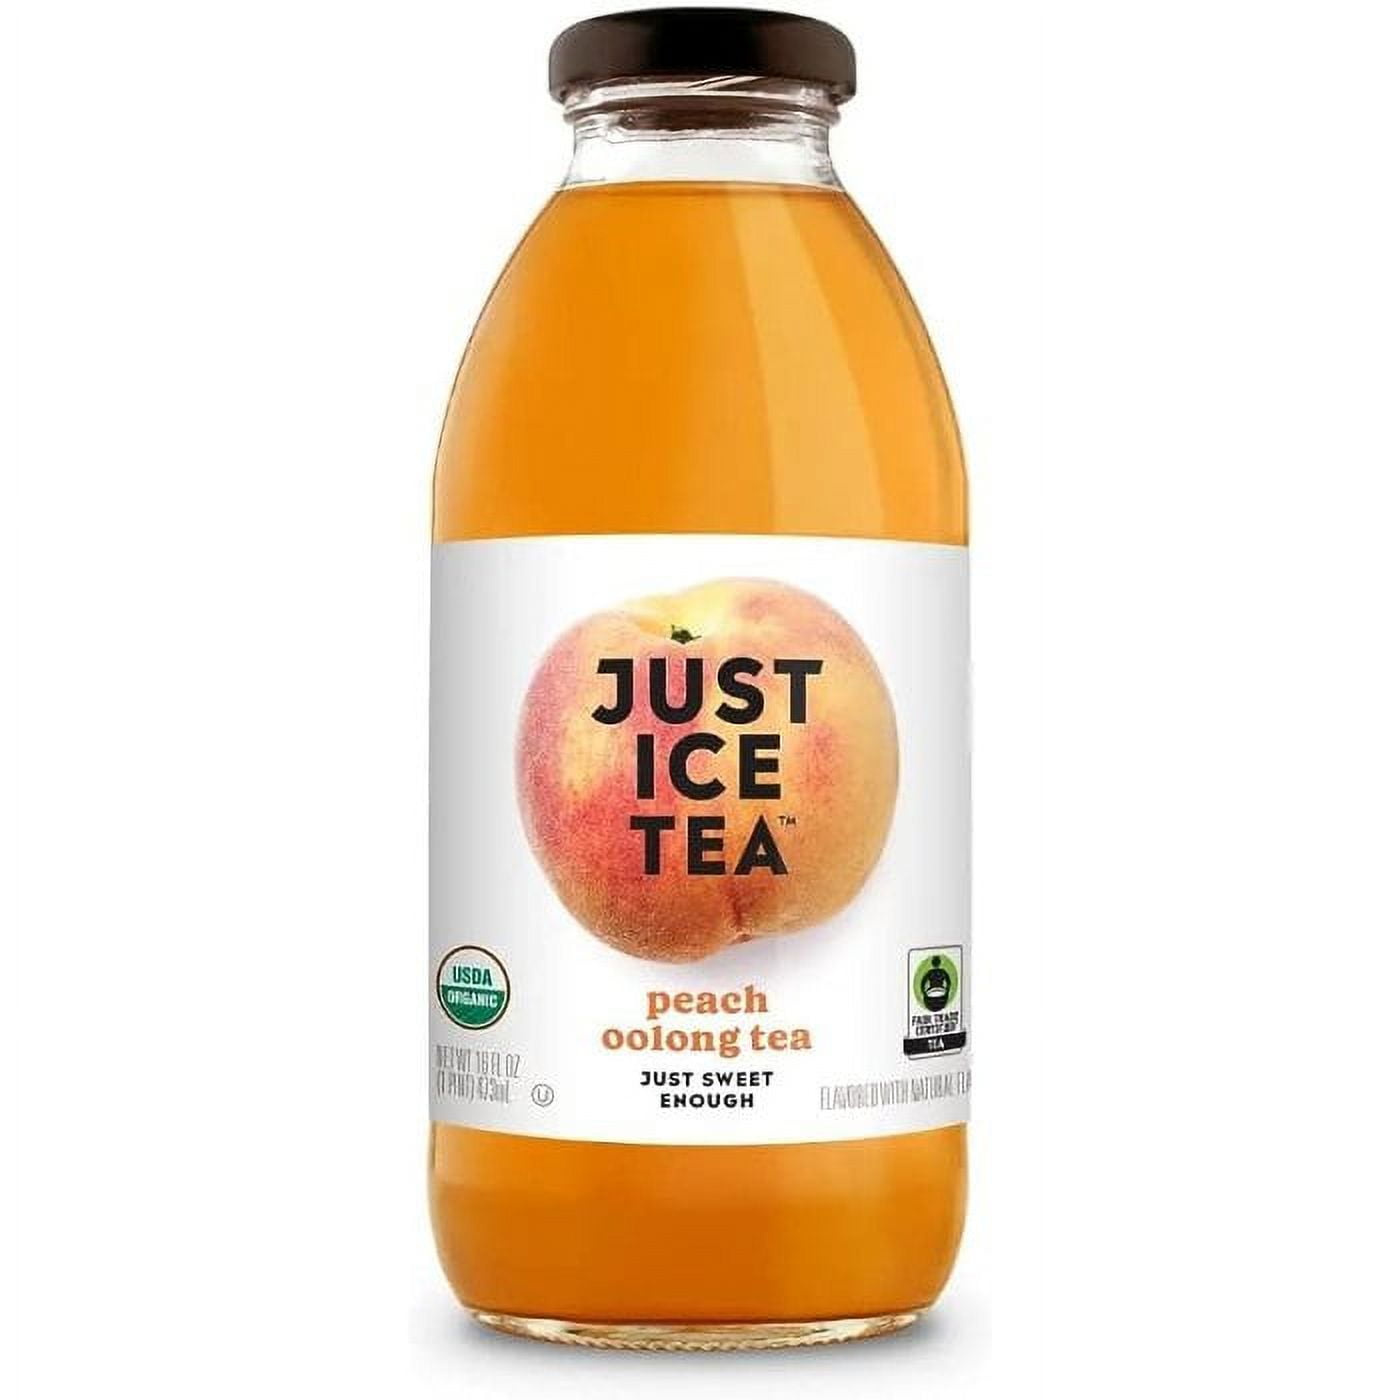 Just Ice Tea Organic Peach Oolong Tea 16 Fl Oz Bottle